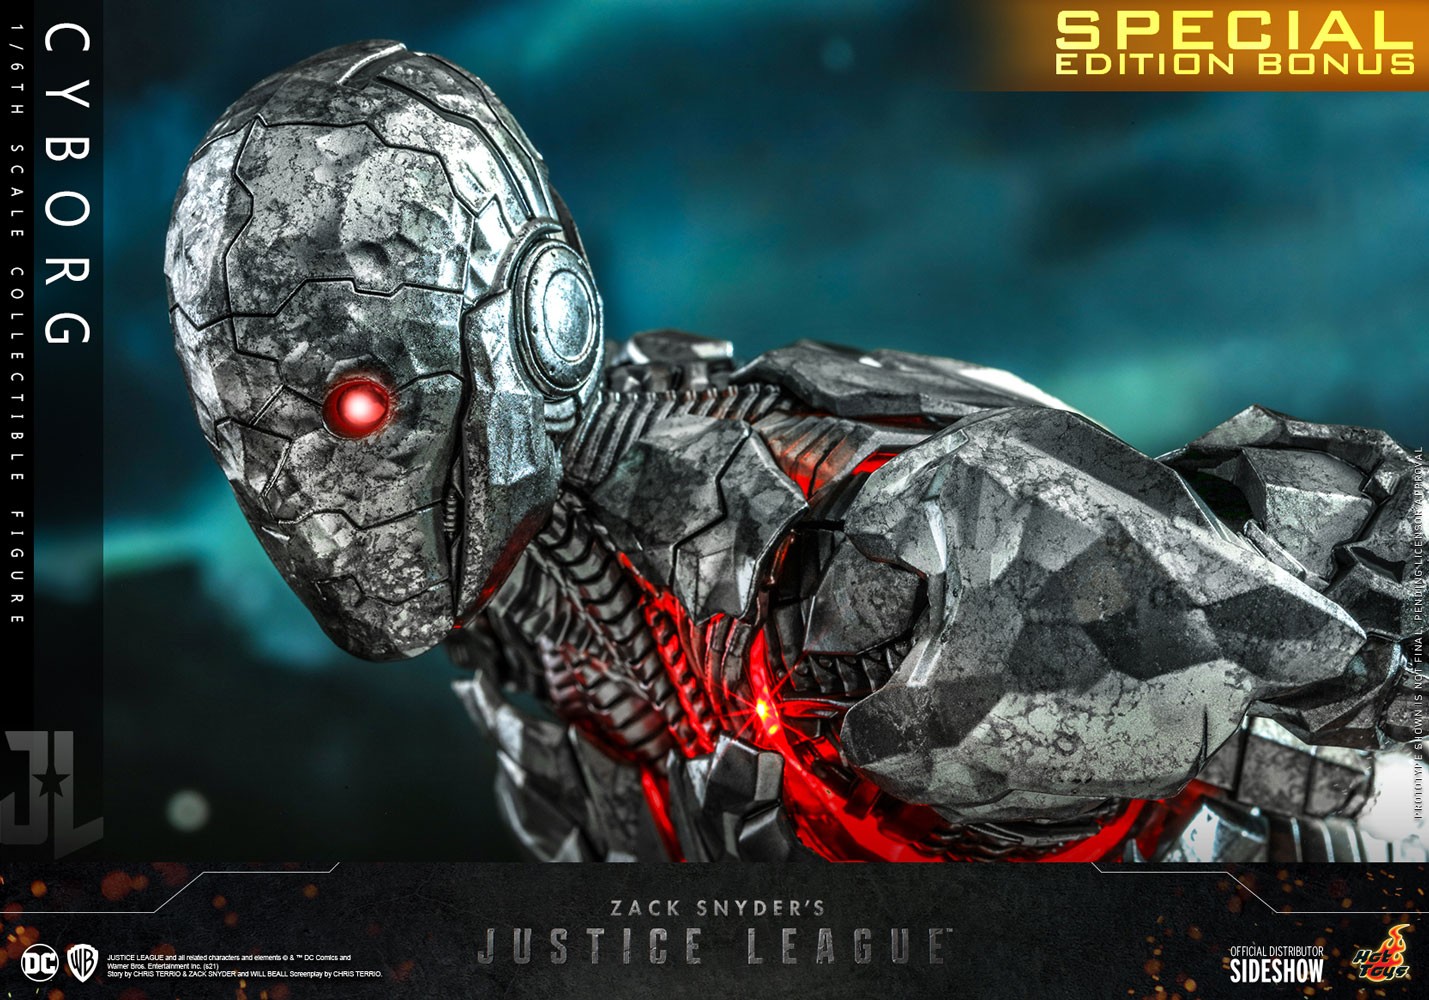 Cyborg (Special Edition) Exclusive Edition - Prototype Shown